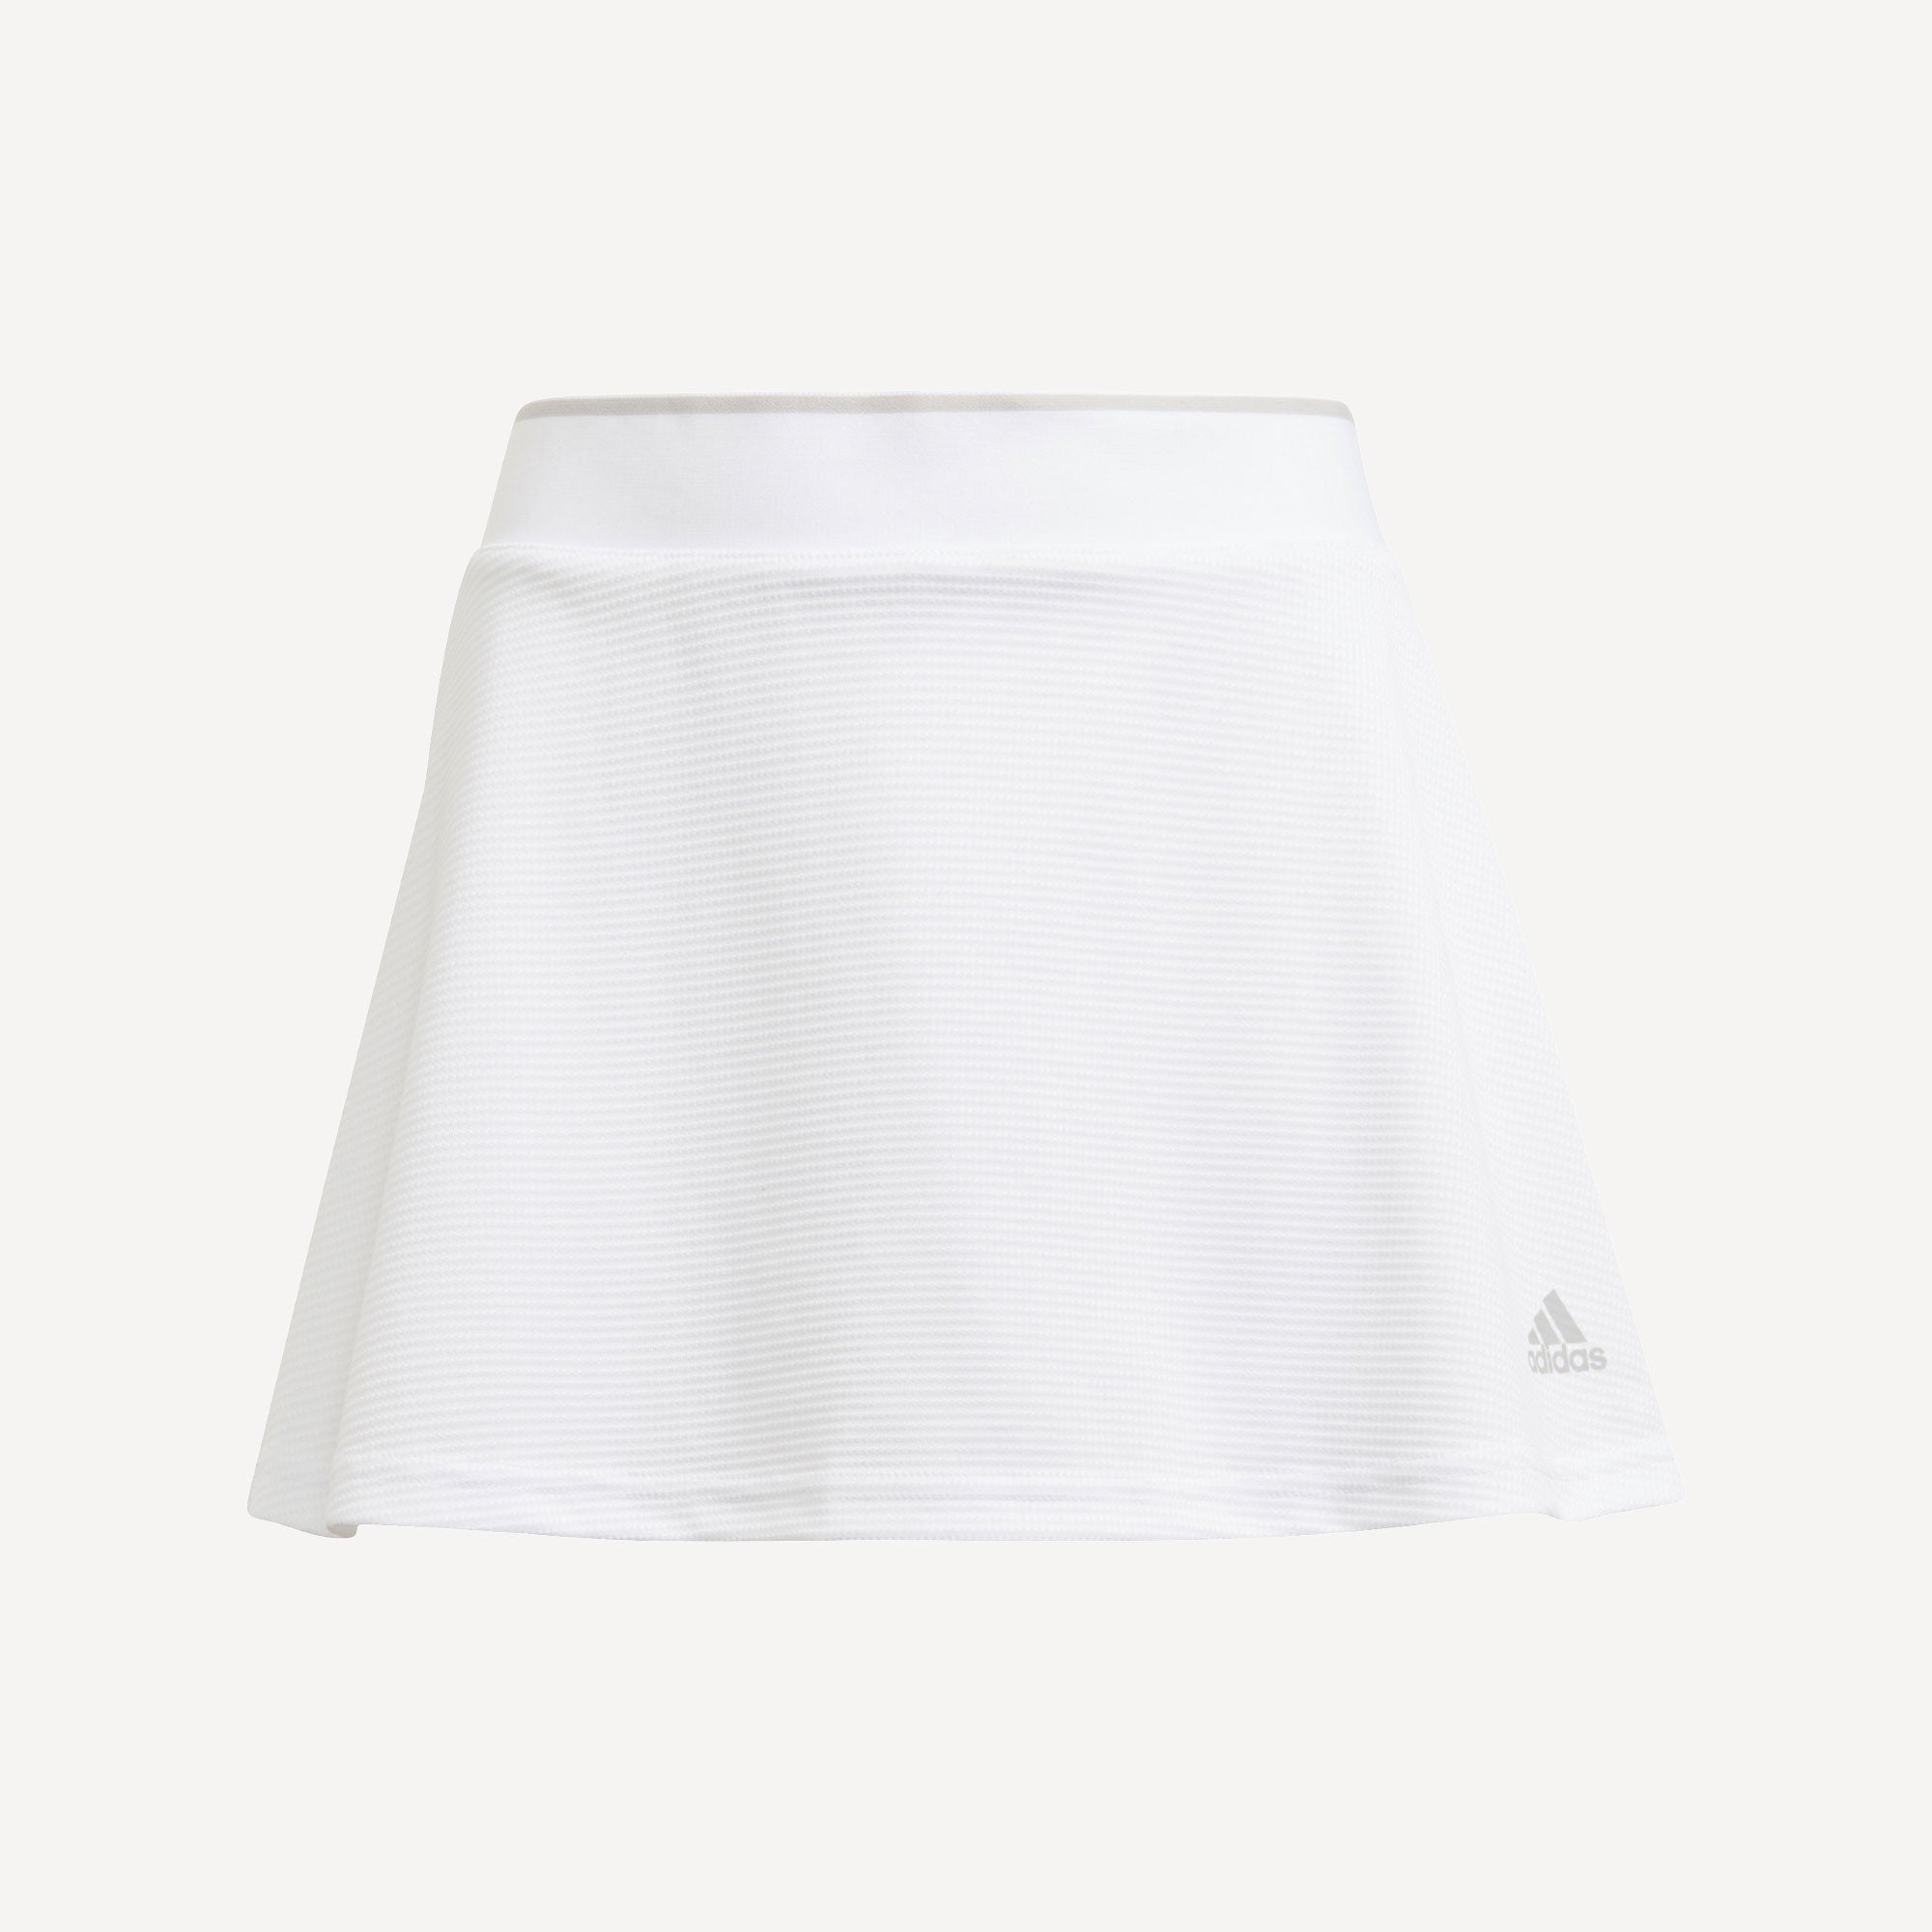 adidas Club Girls' Tennis Skirt White (1)